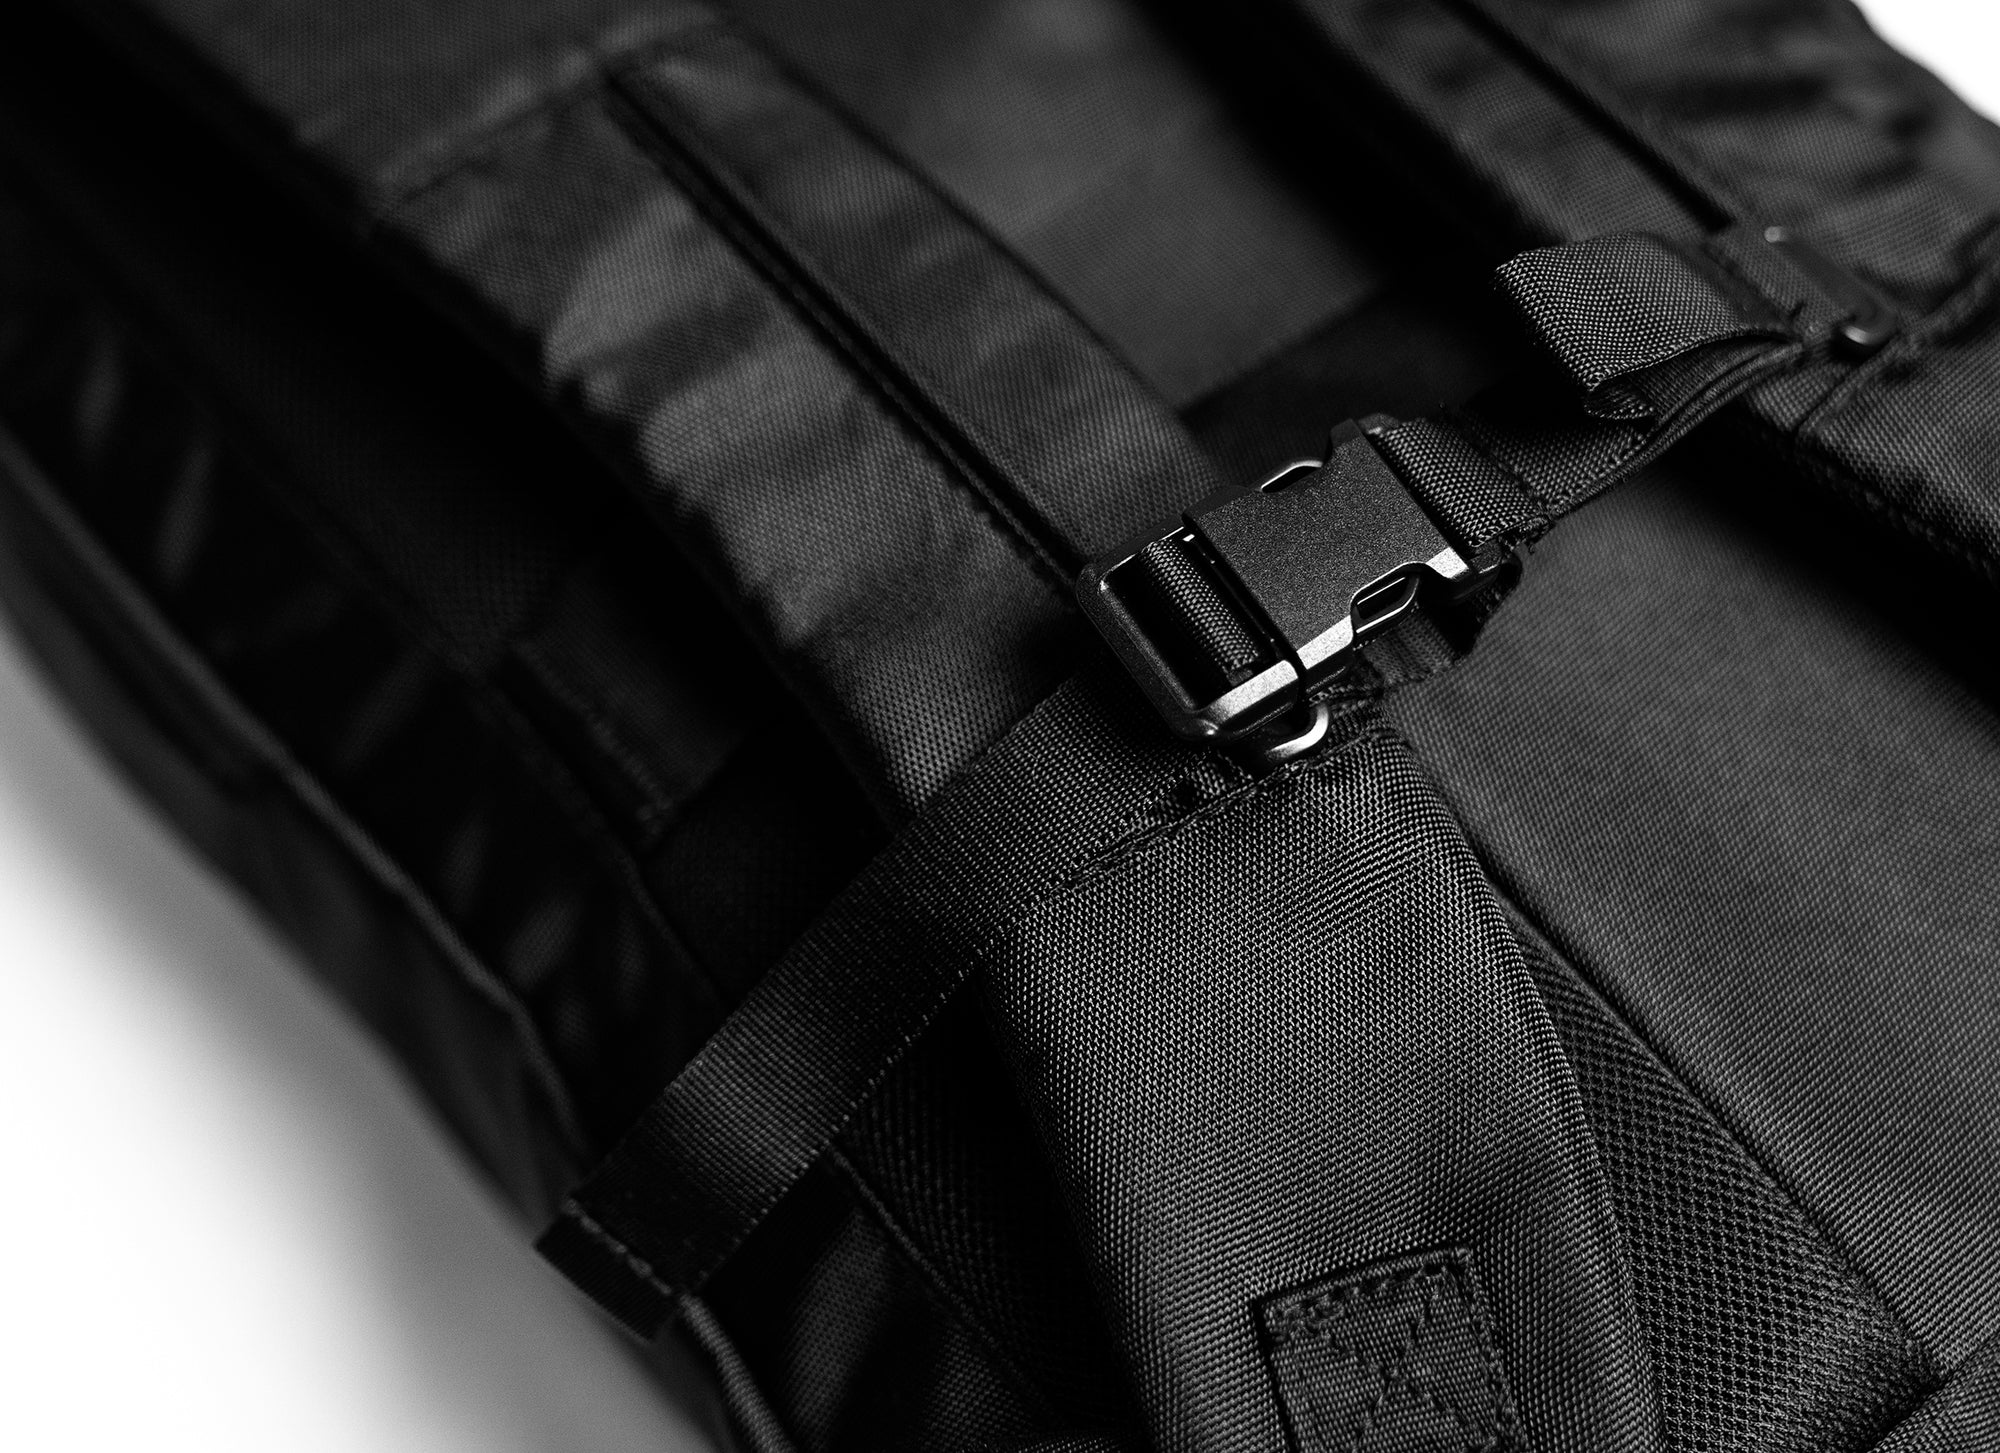 Covert Backpack - Black - Live Fit. Apparel